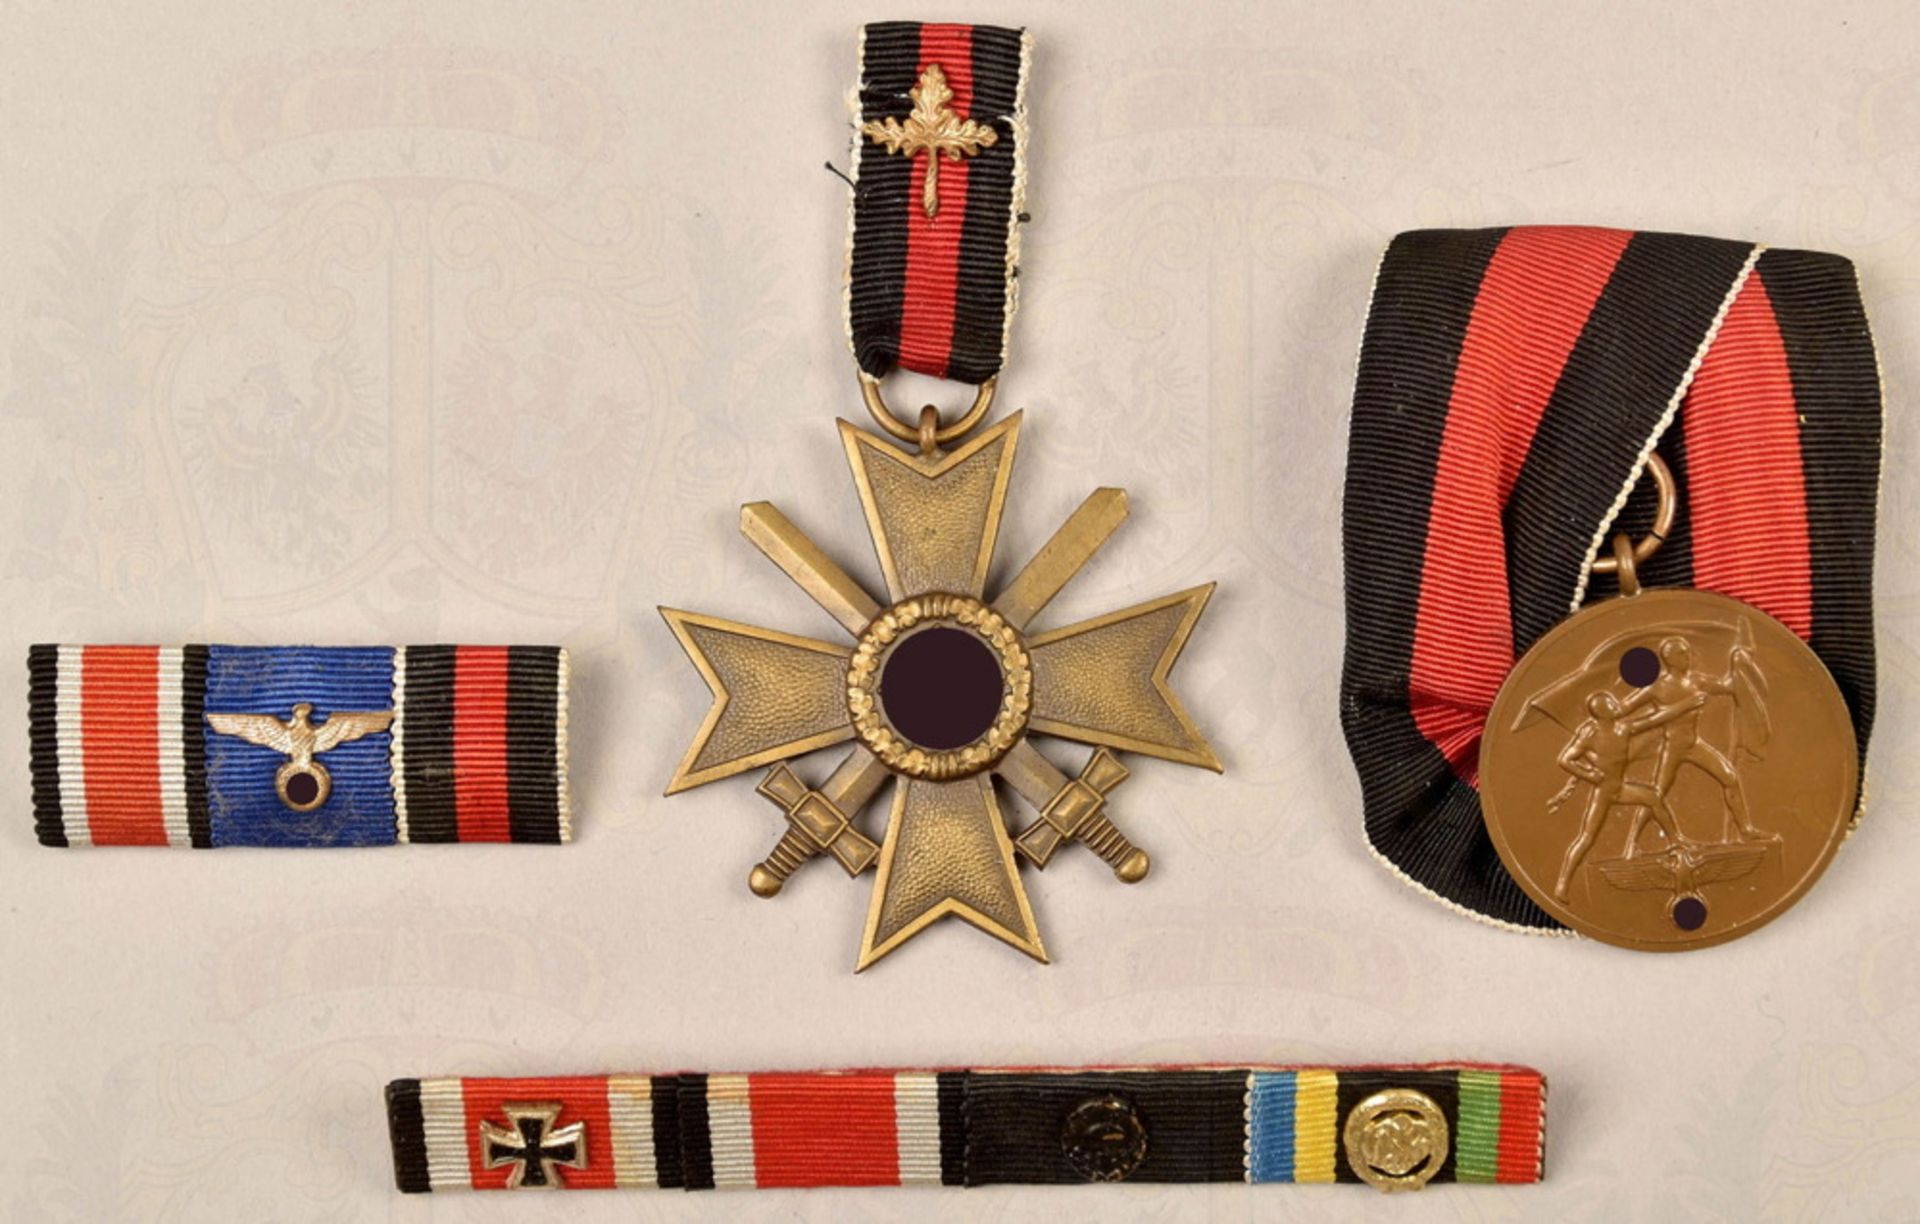 Sudeten Medal 1938 and War Merit Cross 2nd Class with Swords